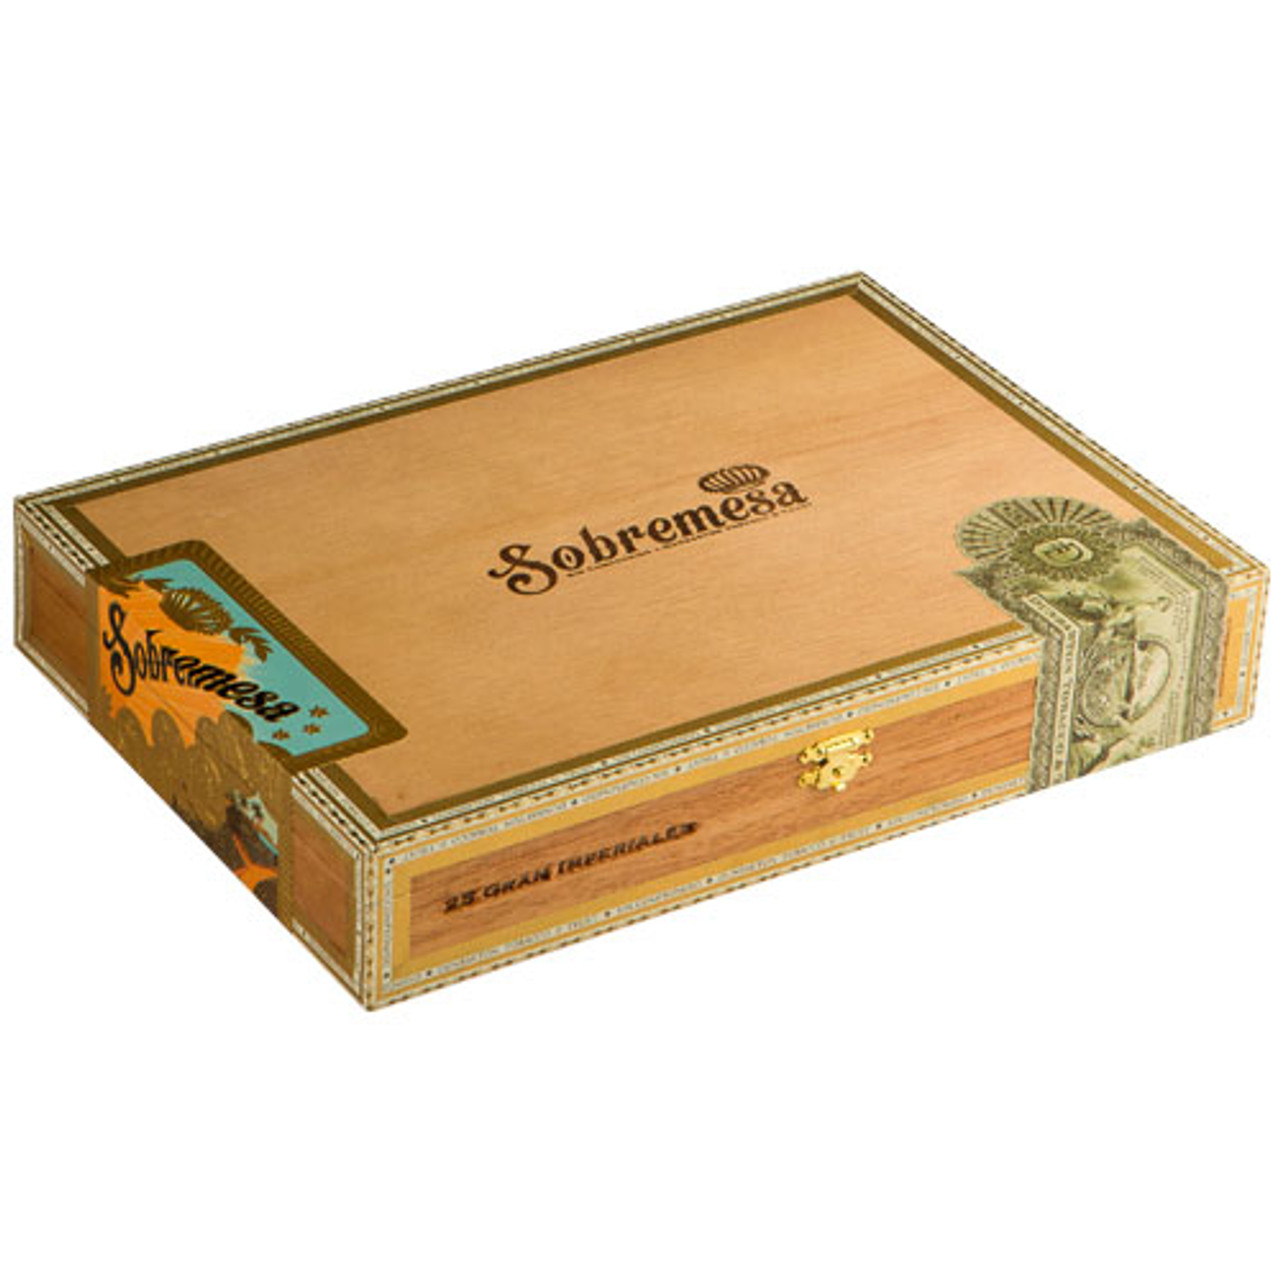 Sobremesa Torpedo Tiempo Cigars - 6 x 54 (Box of 25)